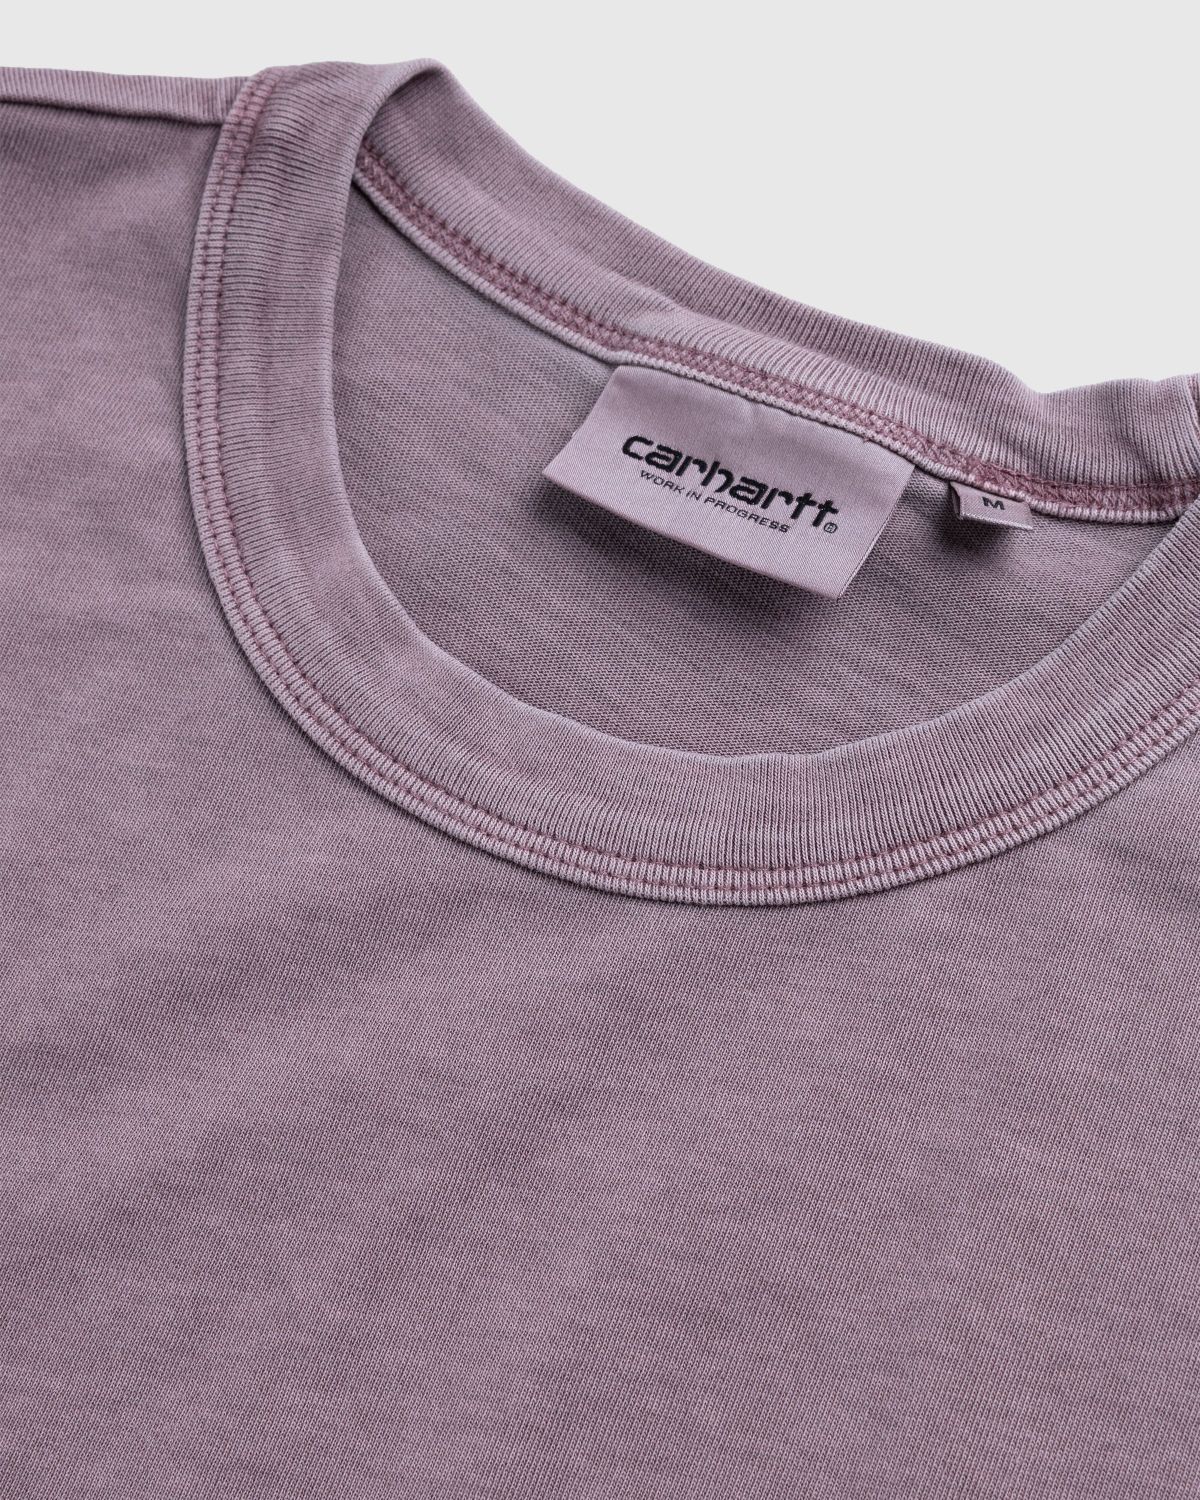 Carhartt WIP – S/S Taos T-Shirt Daphne/Garment-Dyed | Highsnobiety Shop